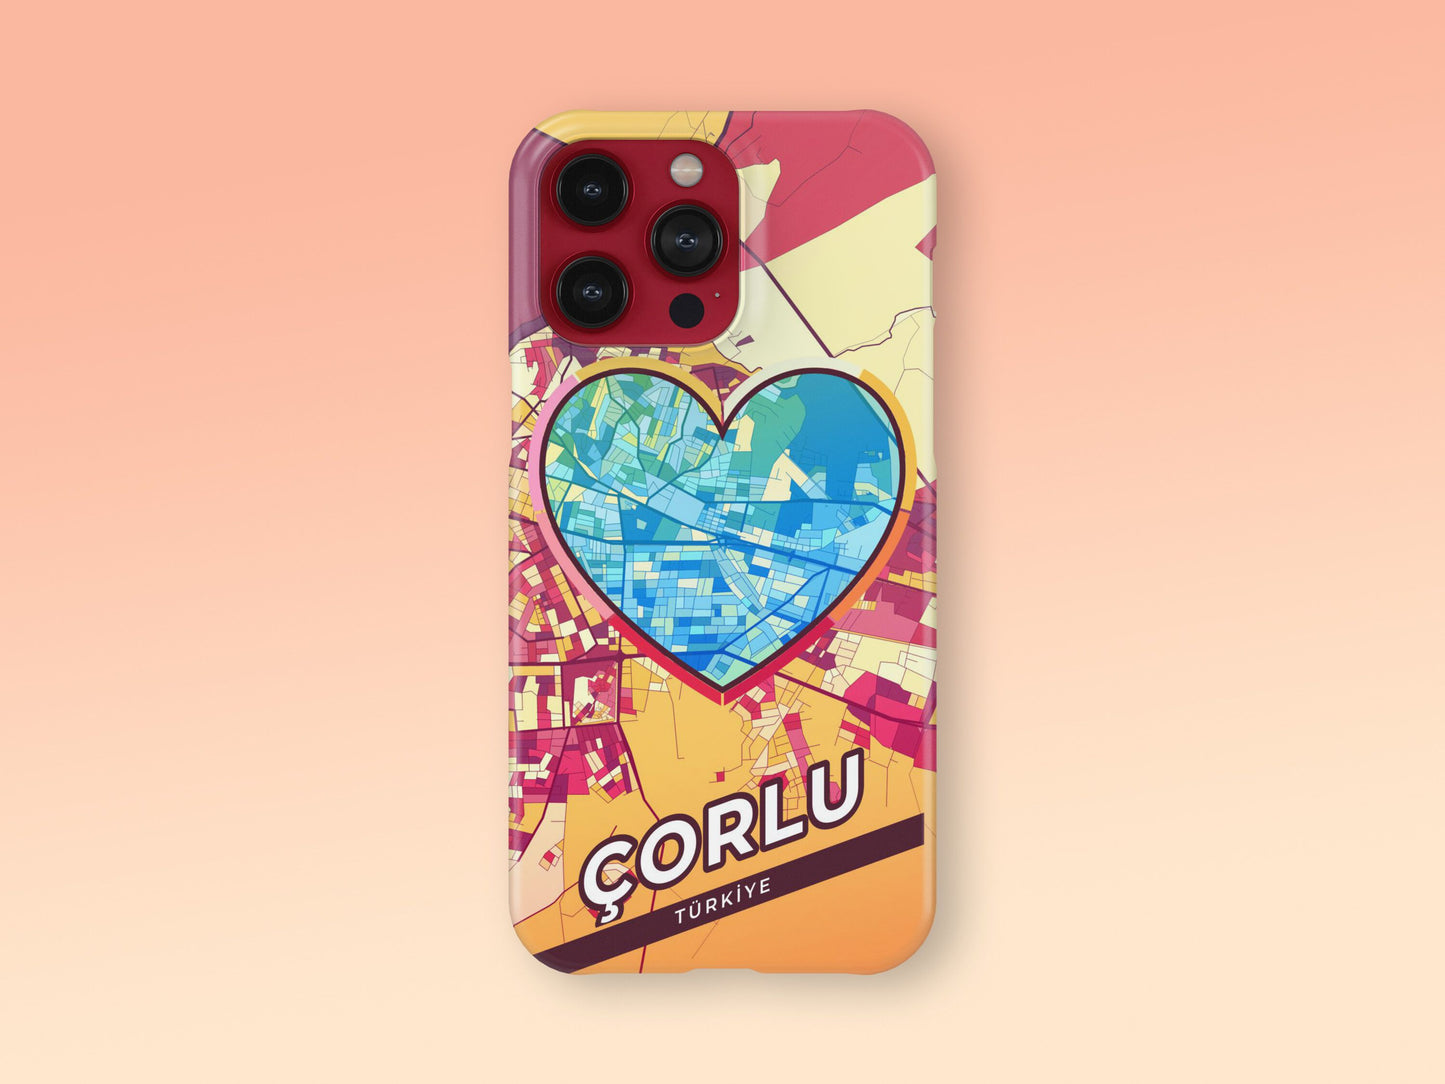 Çorlu Turkey slim phone case with colorful icon. Birthday, wedding or housewarming gift. Couple match cases. 2